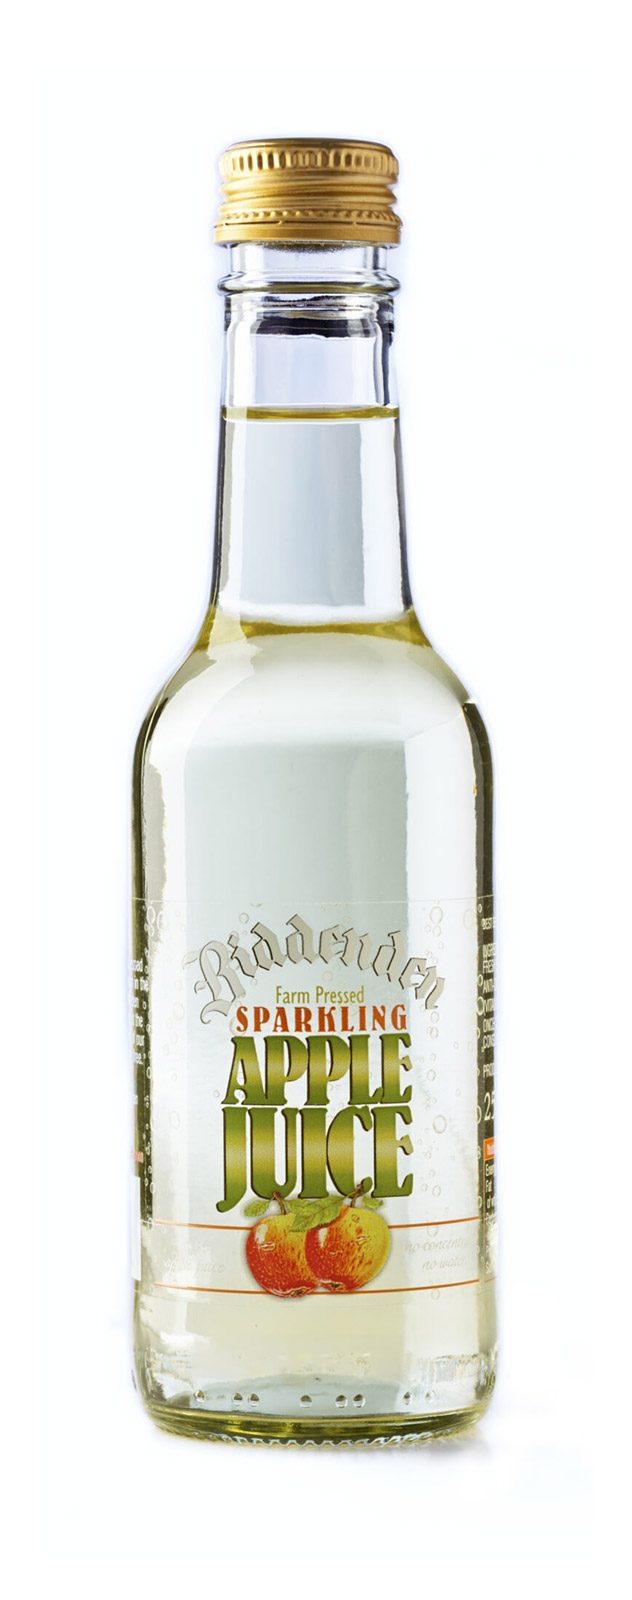 Biddenden Sparkling Apple Juice 250ml bottle